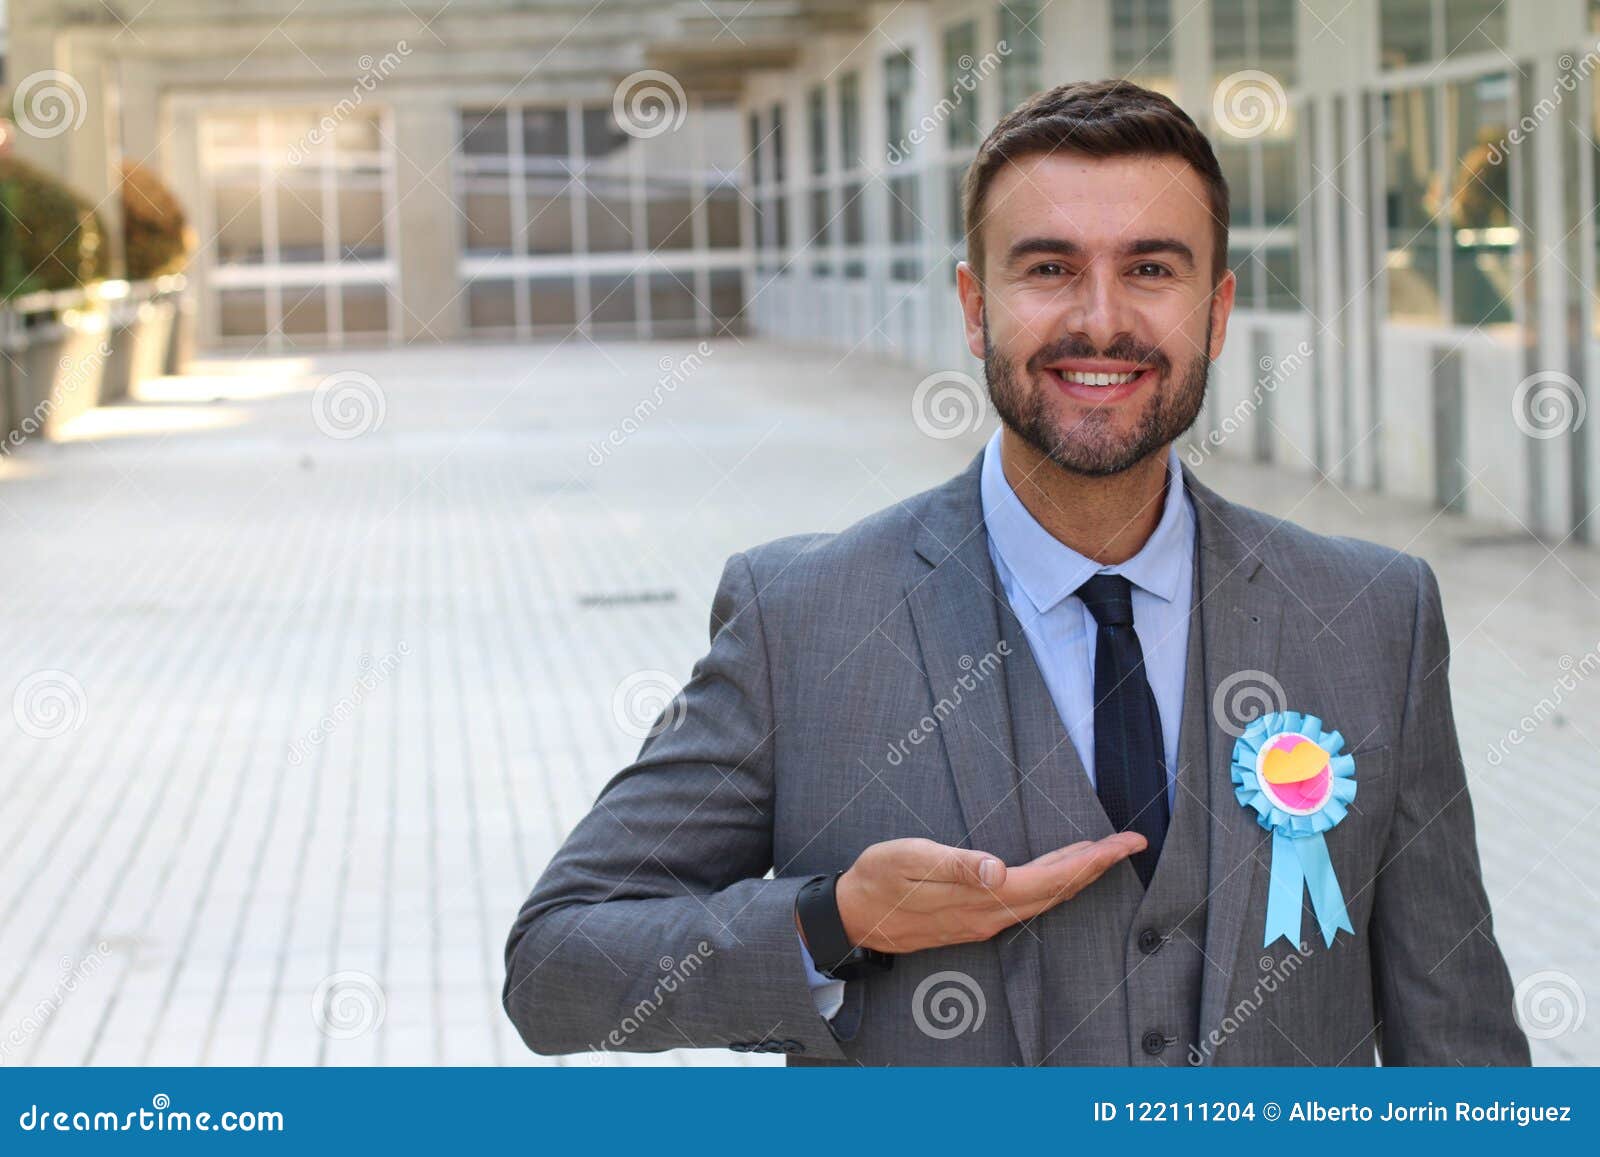 Businessman Showing a Ribbon Award Stock Photo - Image of boss ...